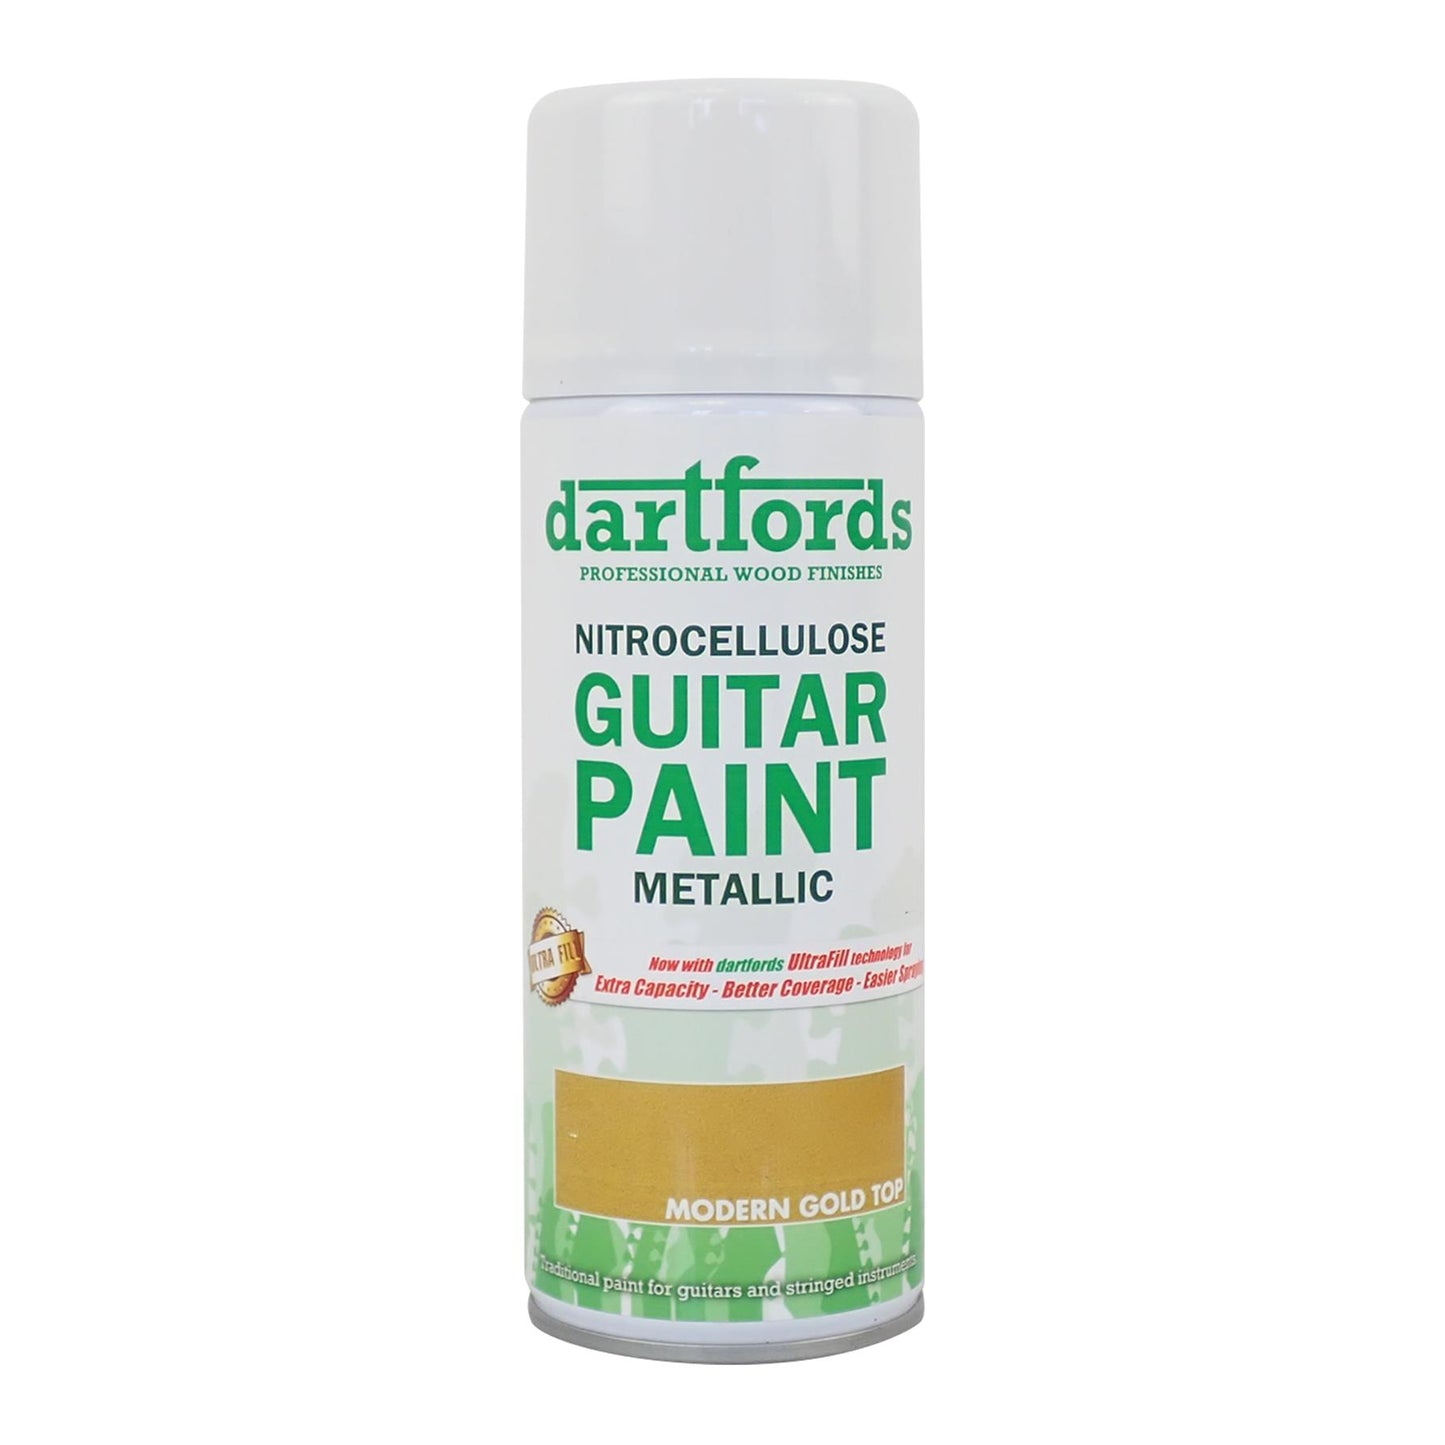 dartfords Modern Gold Top Metallic Nitrocellulose Guitar Paint - 400ml Aerosol